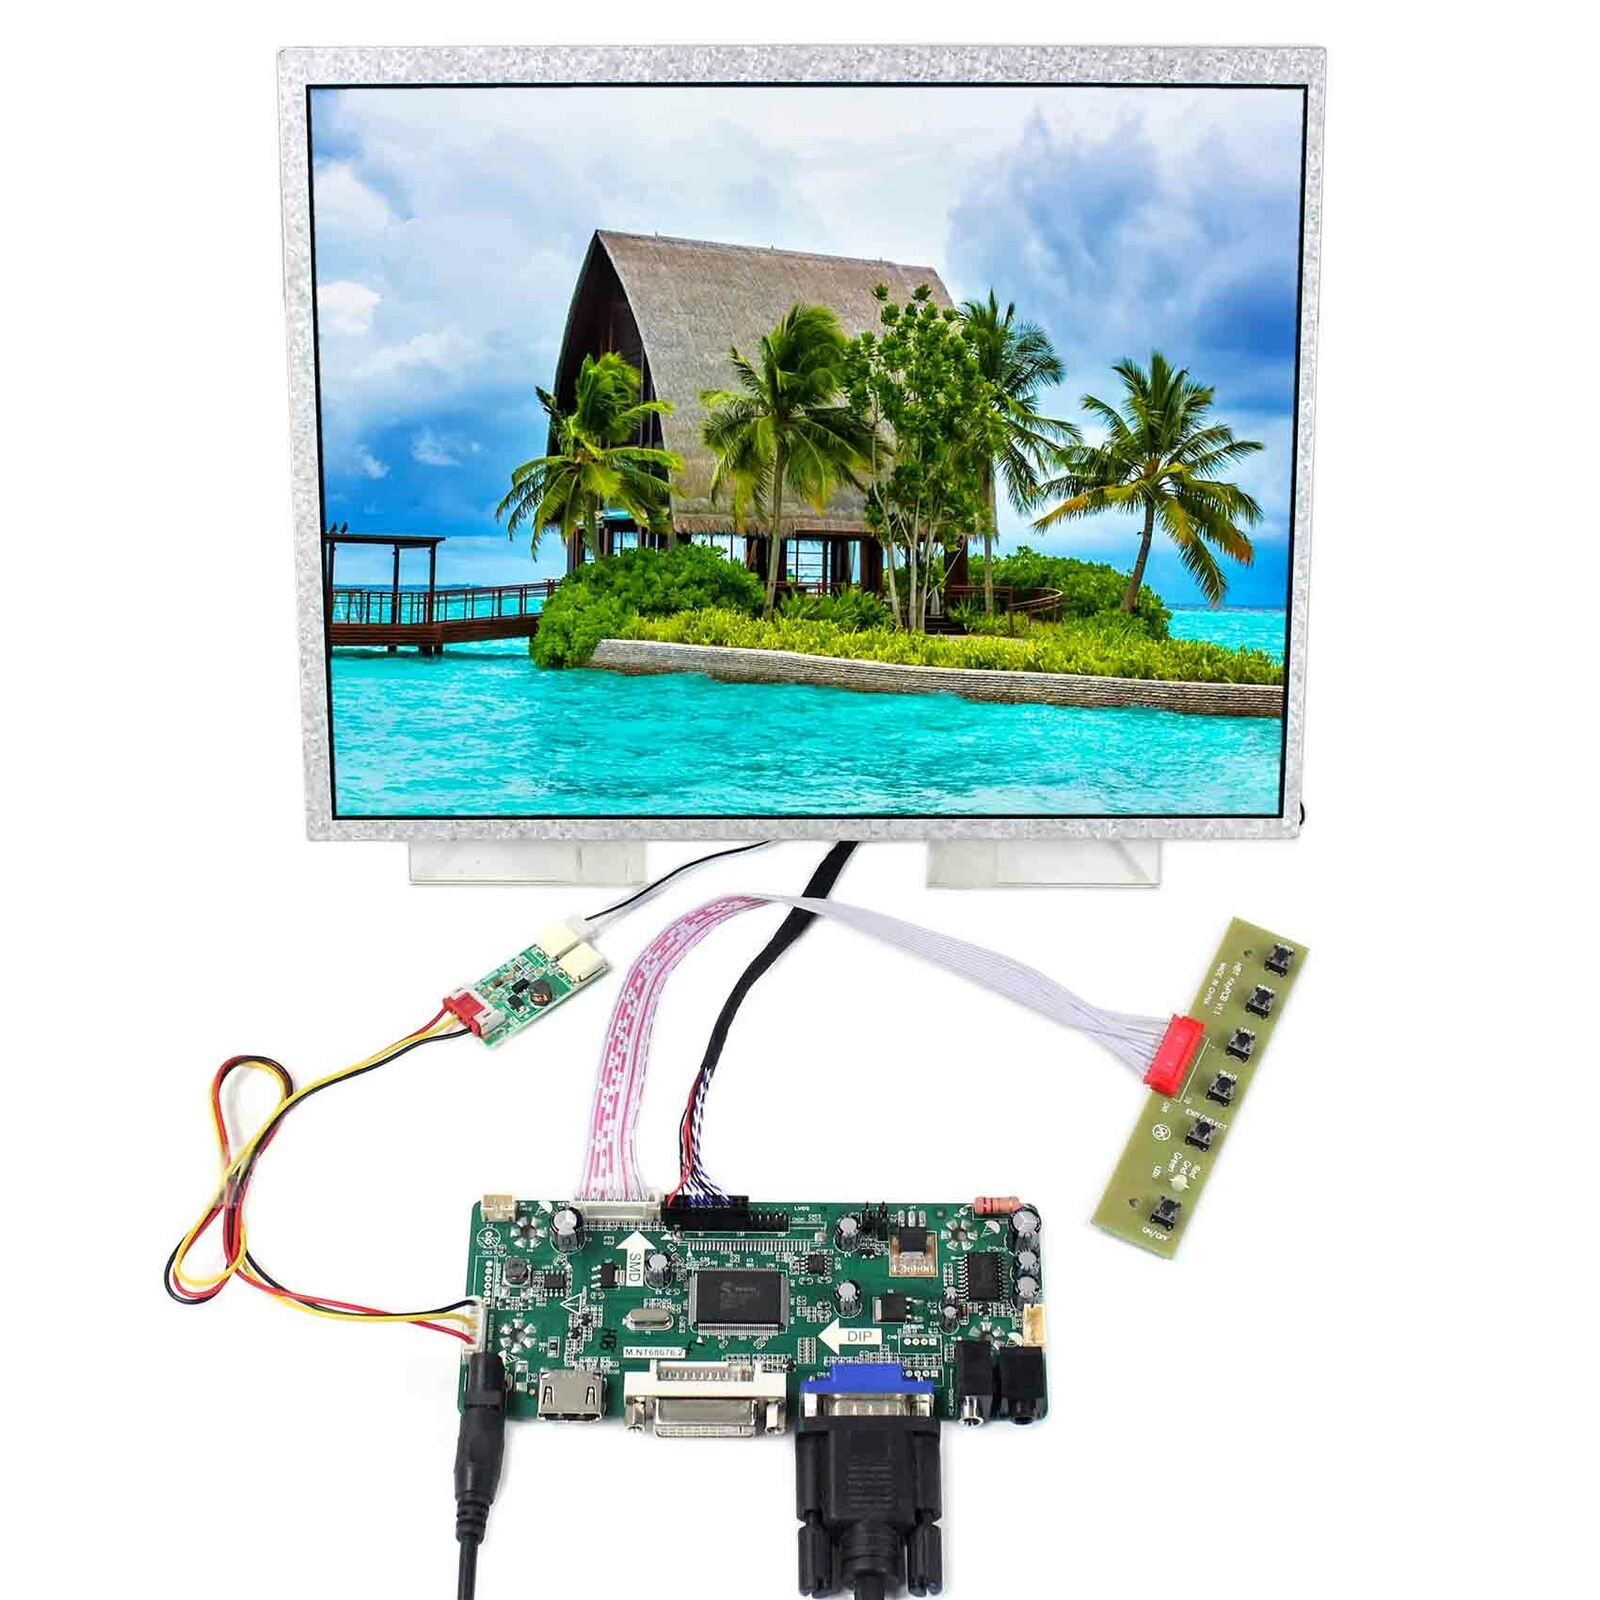 HD MI DVI VGA LCD Controller Board 12.1inch LCD Screen 1024x768 WLED 350nit